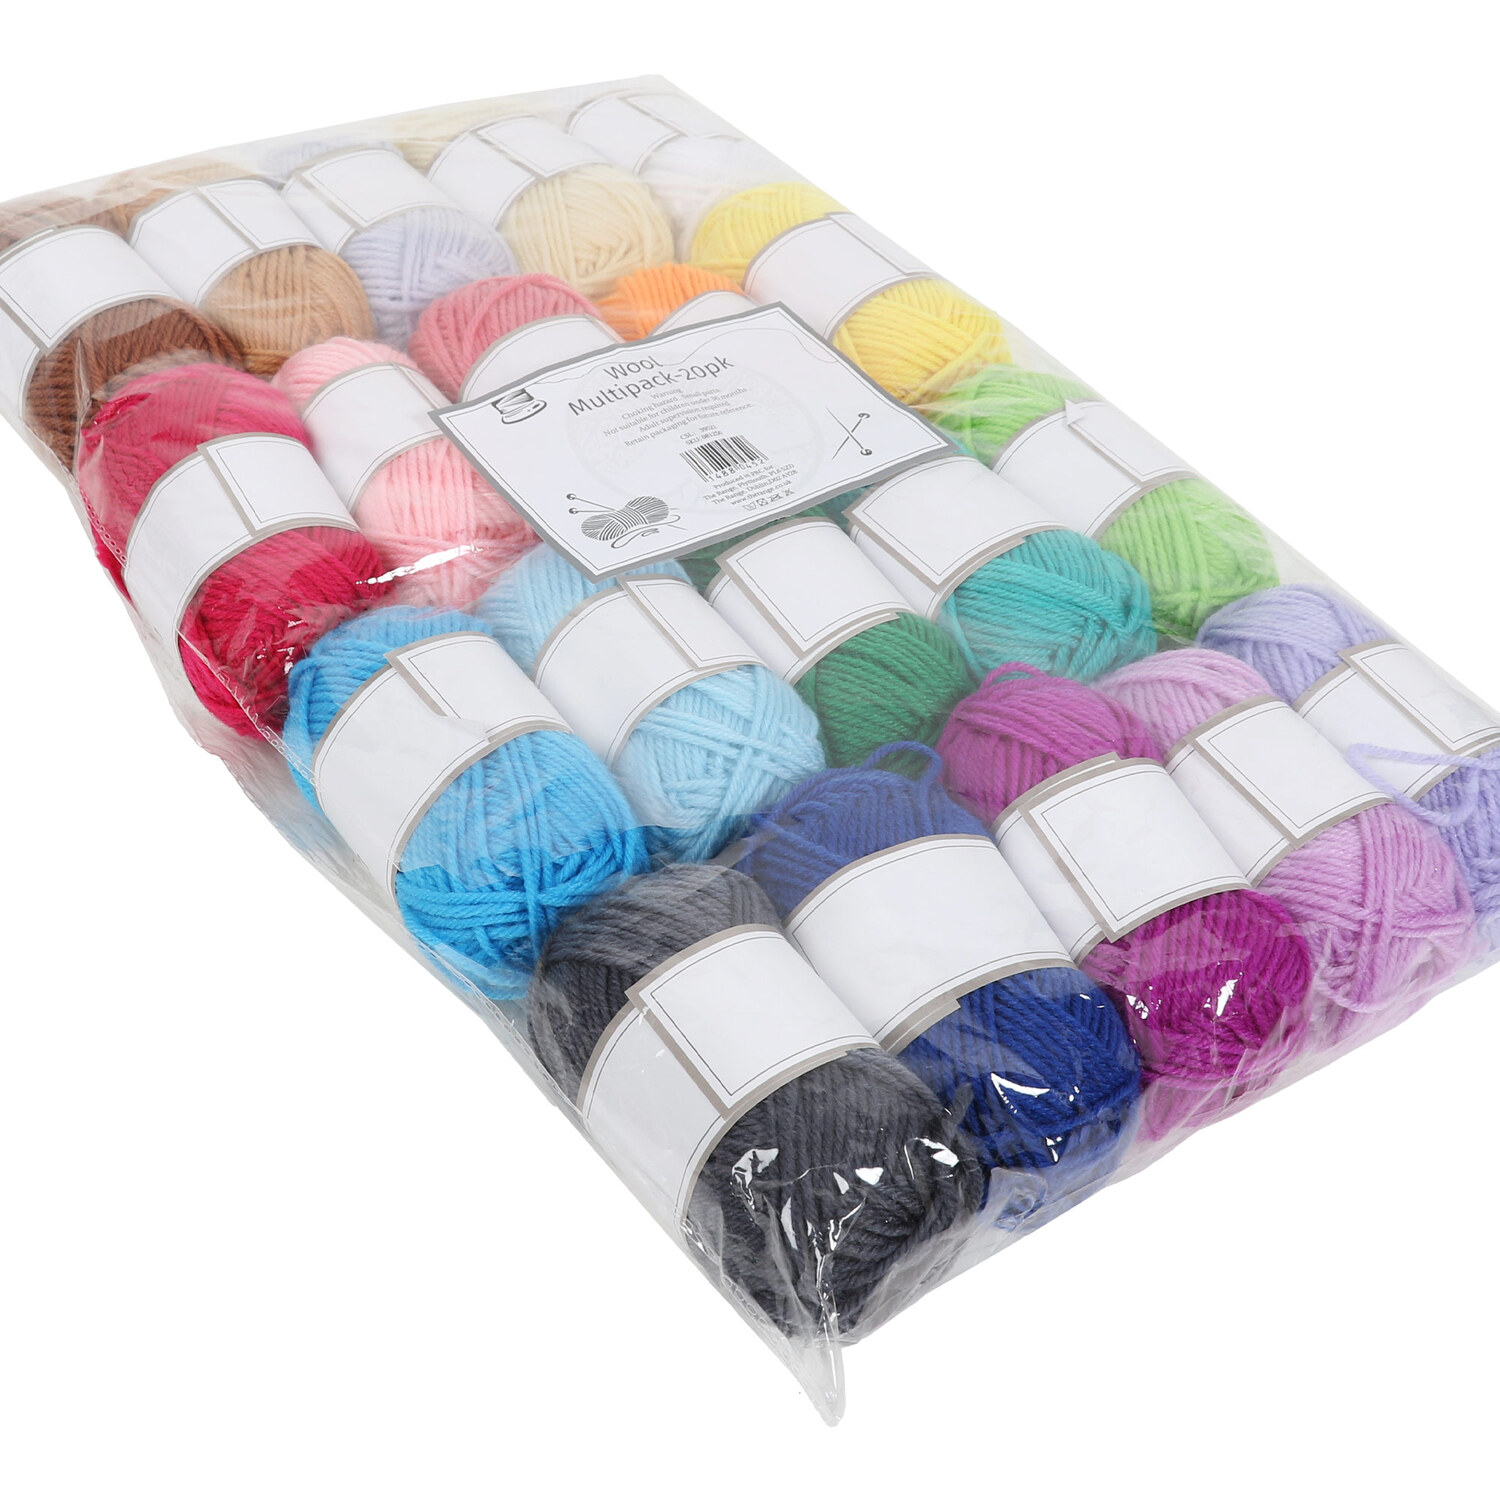 Divante Knitting Yarns 25g 20 Pack Image 2